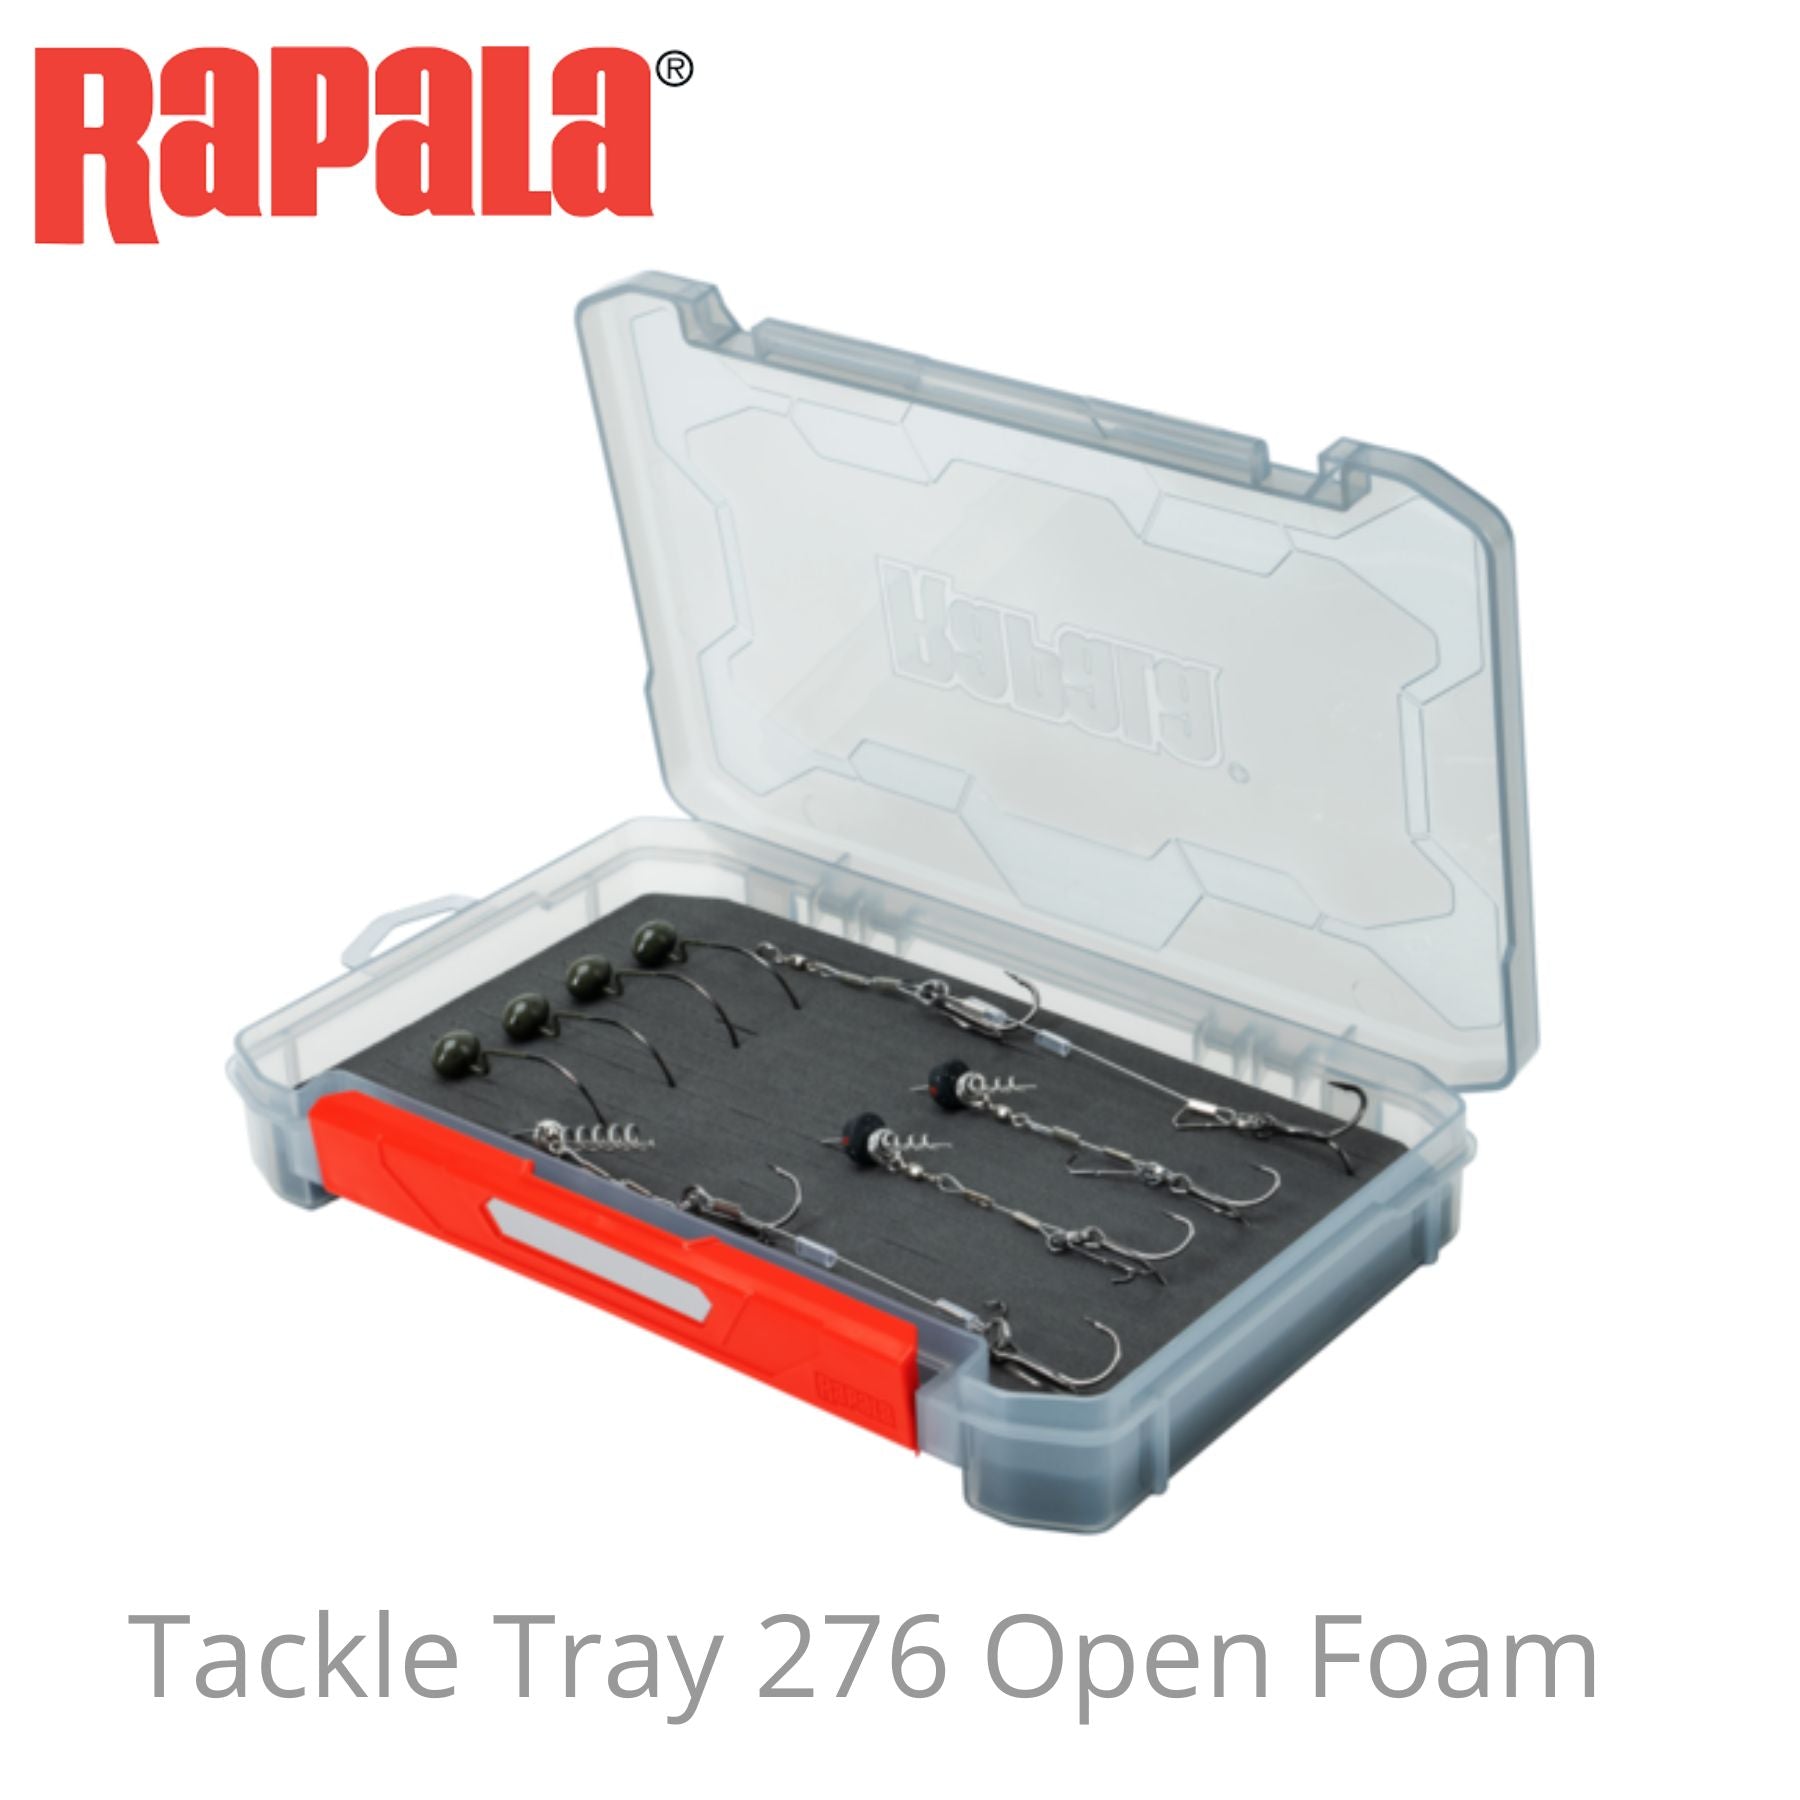 Vieherasia Tackle Tray 276 Open Foam